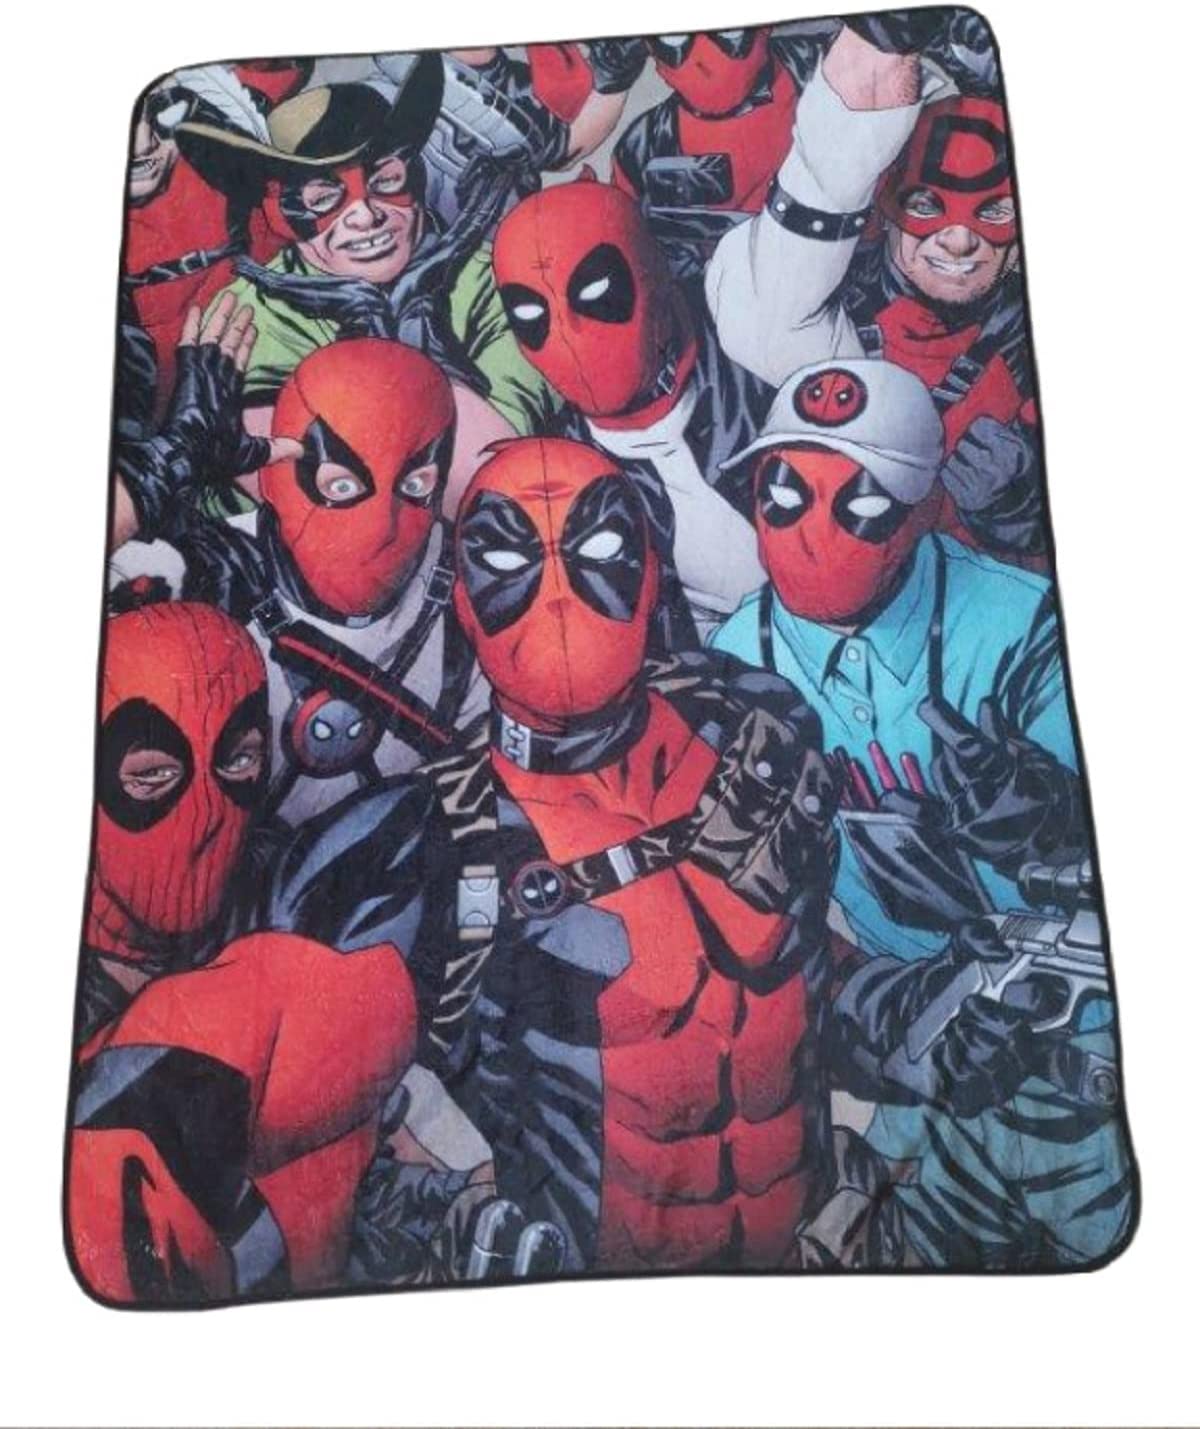 Marvel Deadpool Faces Fleece Softest Throw Blanket| Measures 60 x 45 Inches